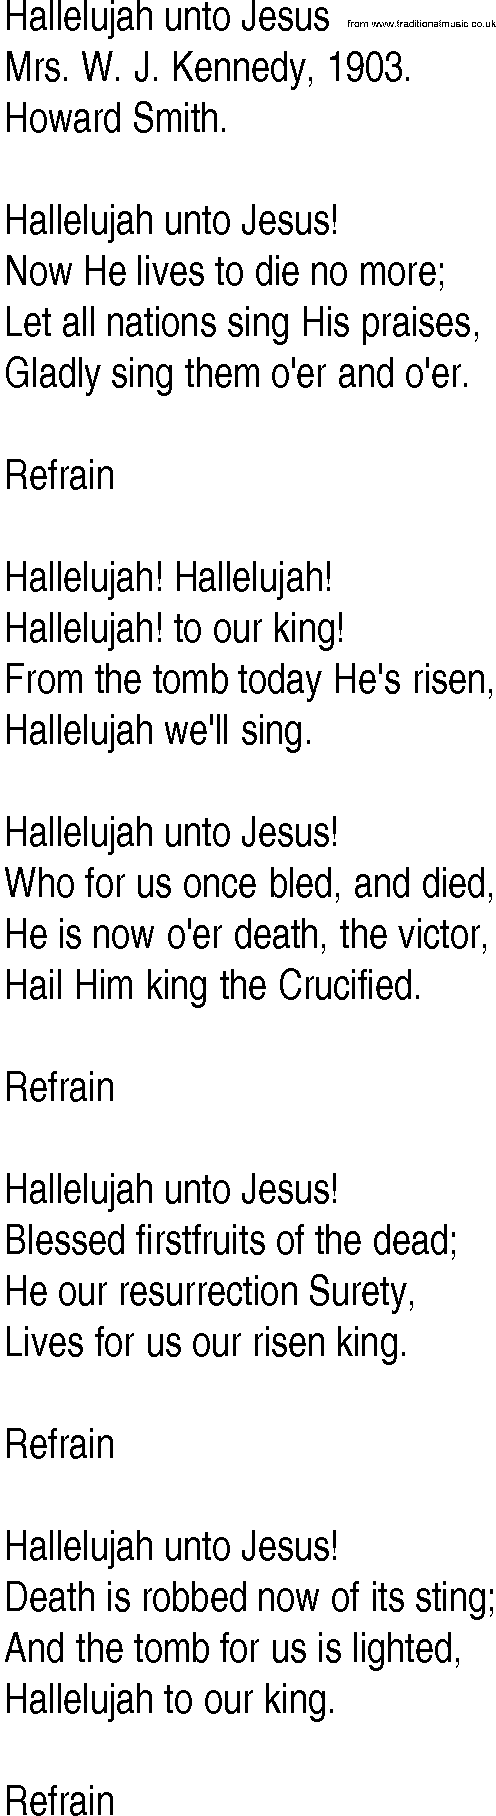 Hymn and Gospel Song: Hallelujah unto Jesus by Mrs W J Kennedy lyrics